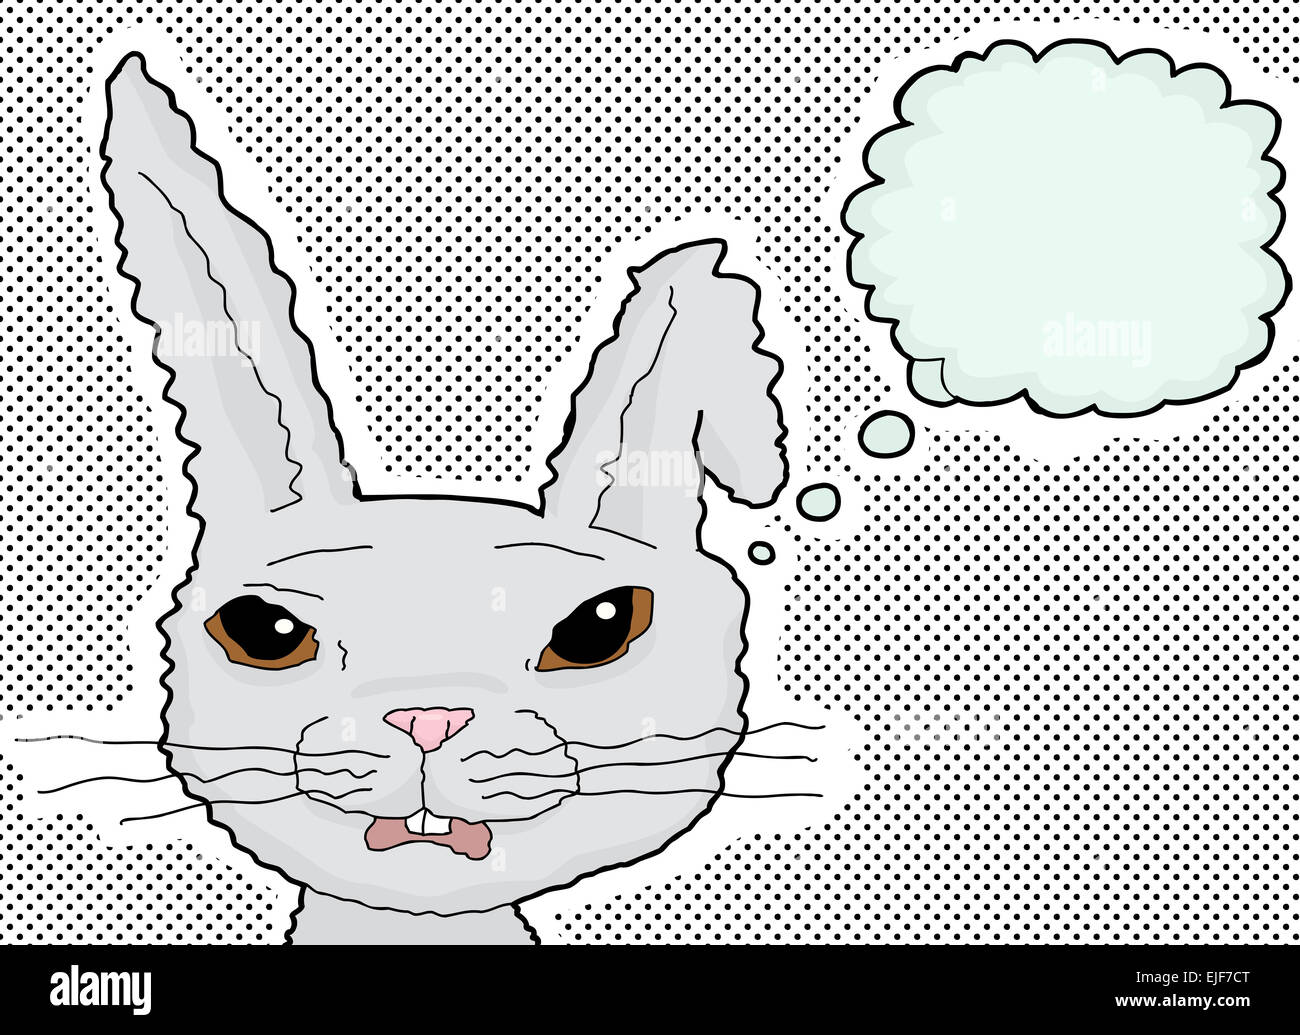 Shocked fuzzy cartoon rabbit with thought bubble Stock Photo